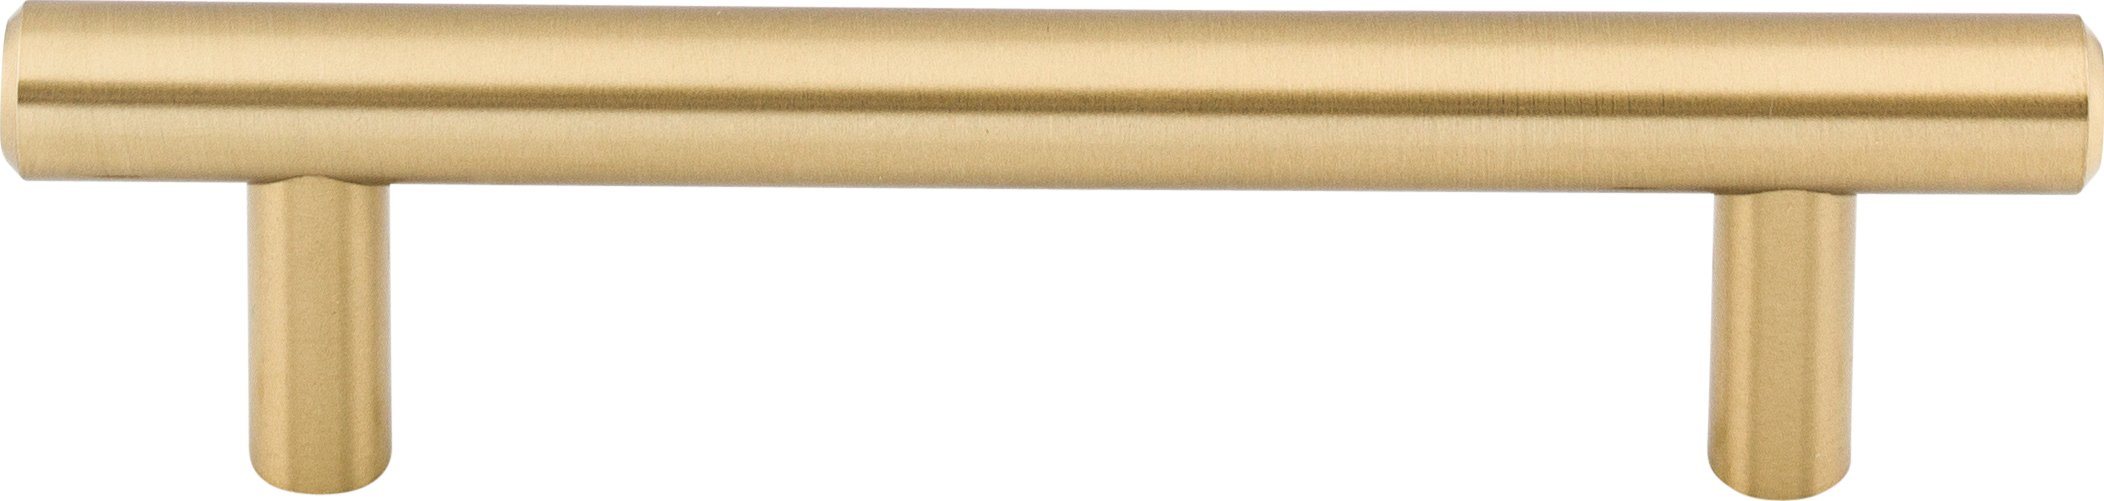 Top Knobs M2419 3-3/4in (96mm) Hopewell Bar Pull Honey Bronze - KnobDepot